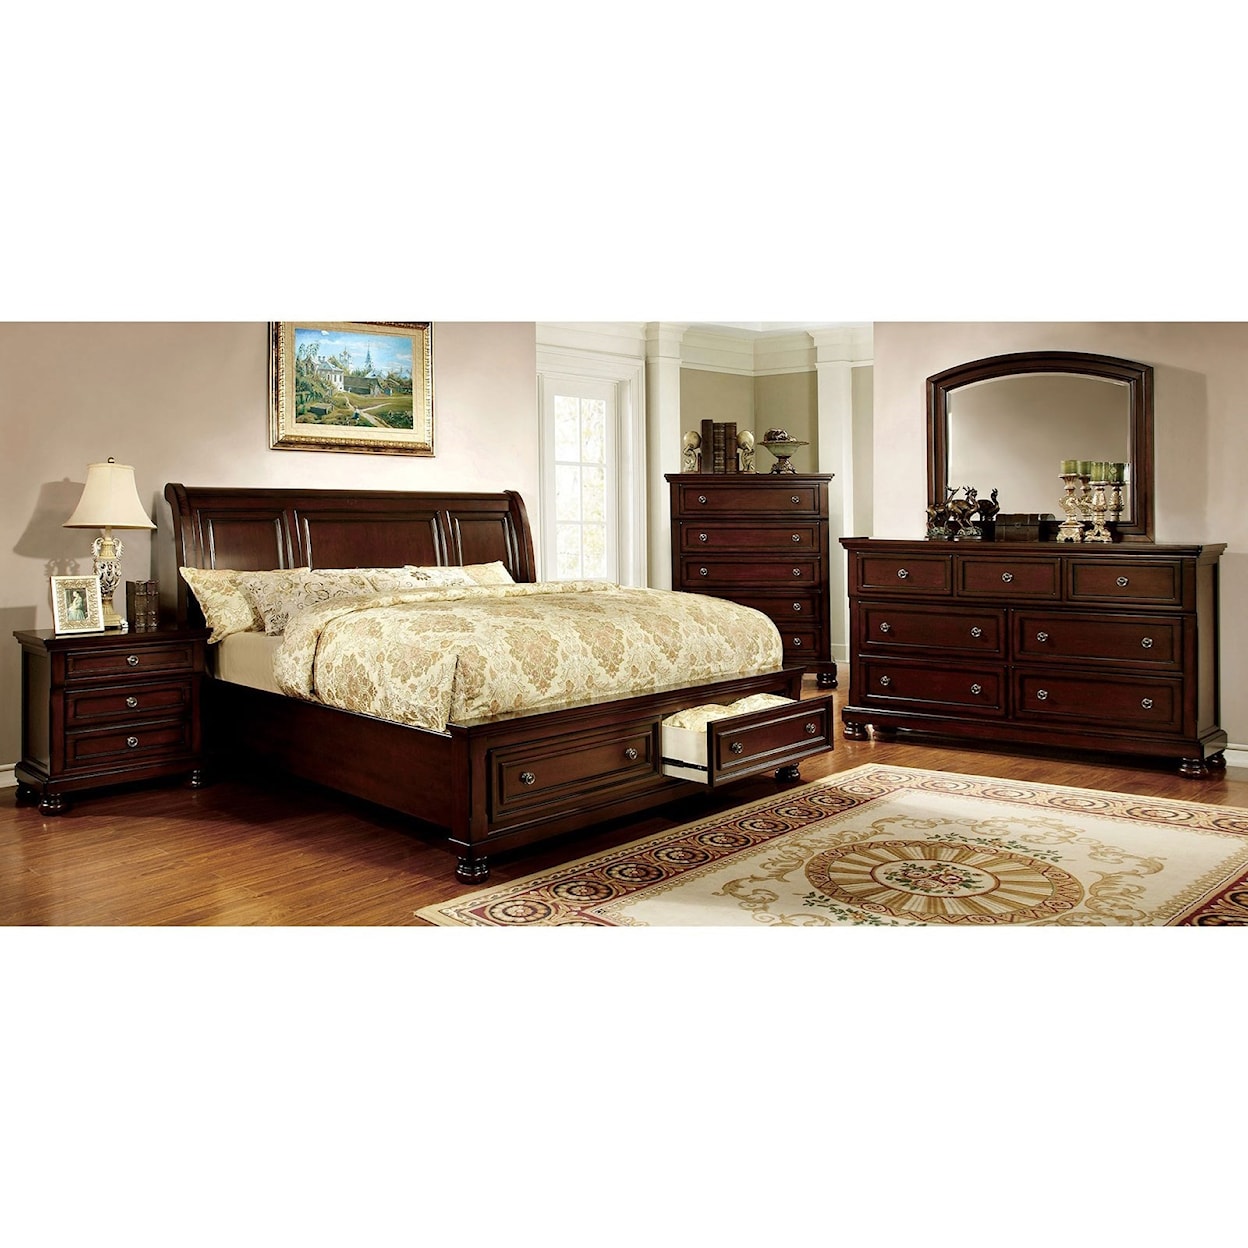 Furniture of America Northville King Bed